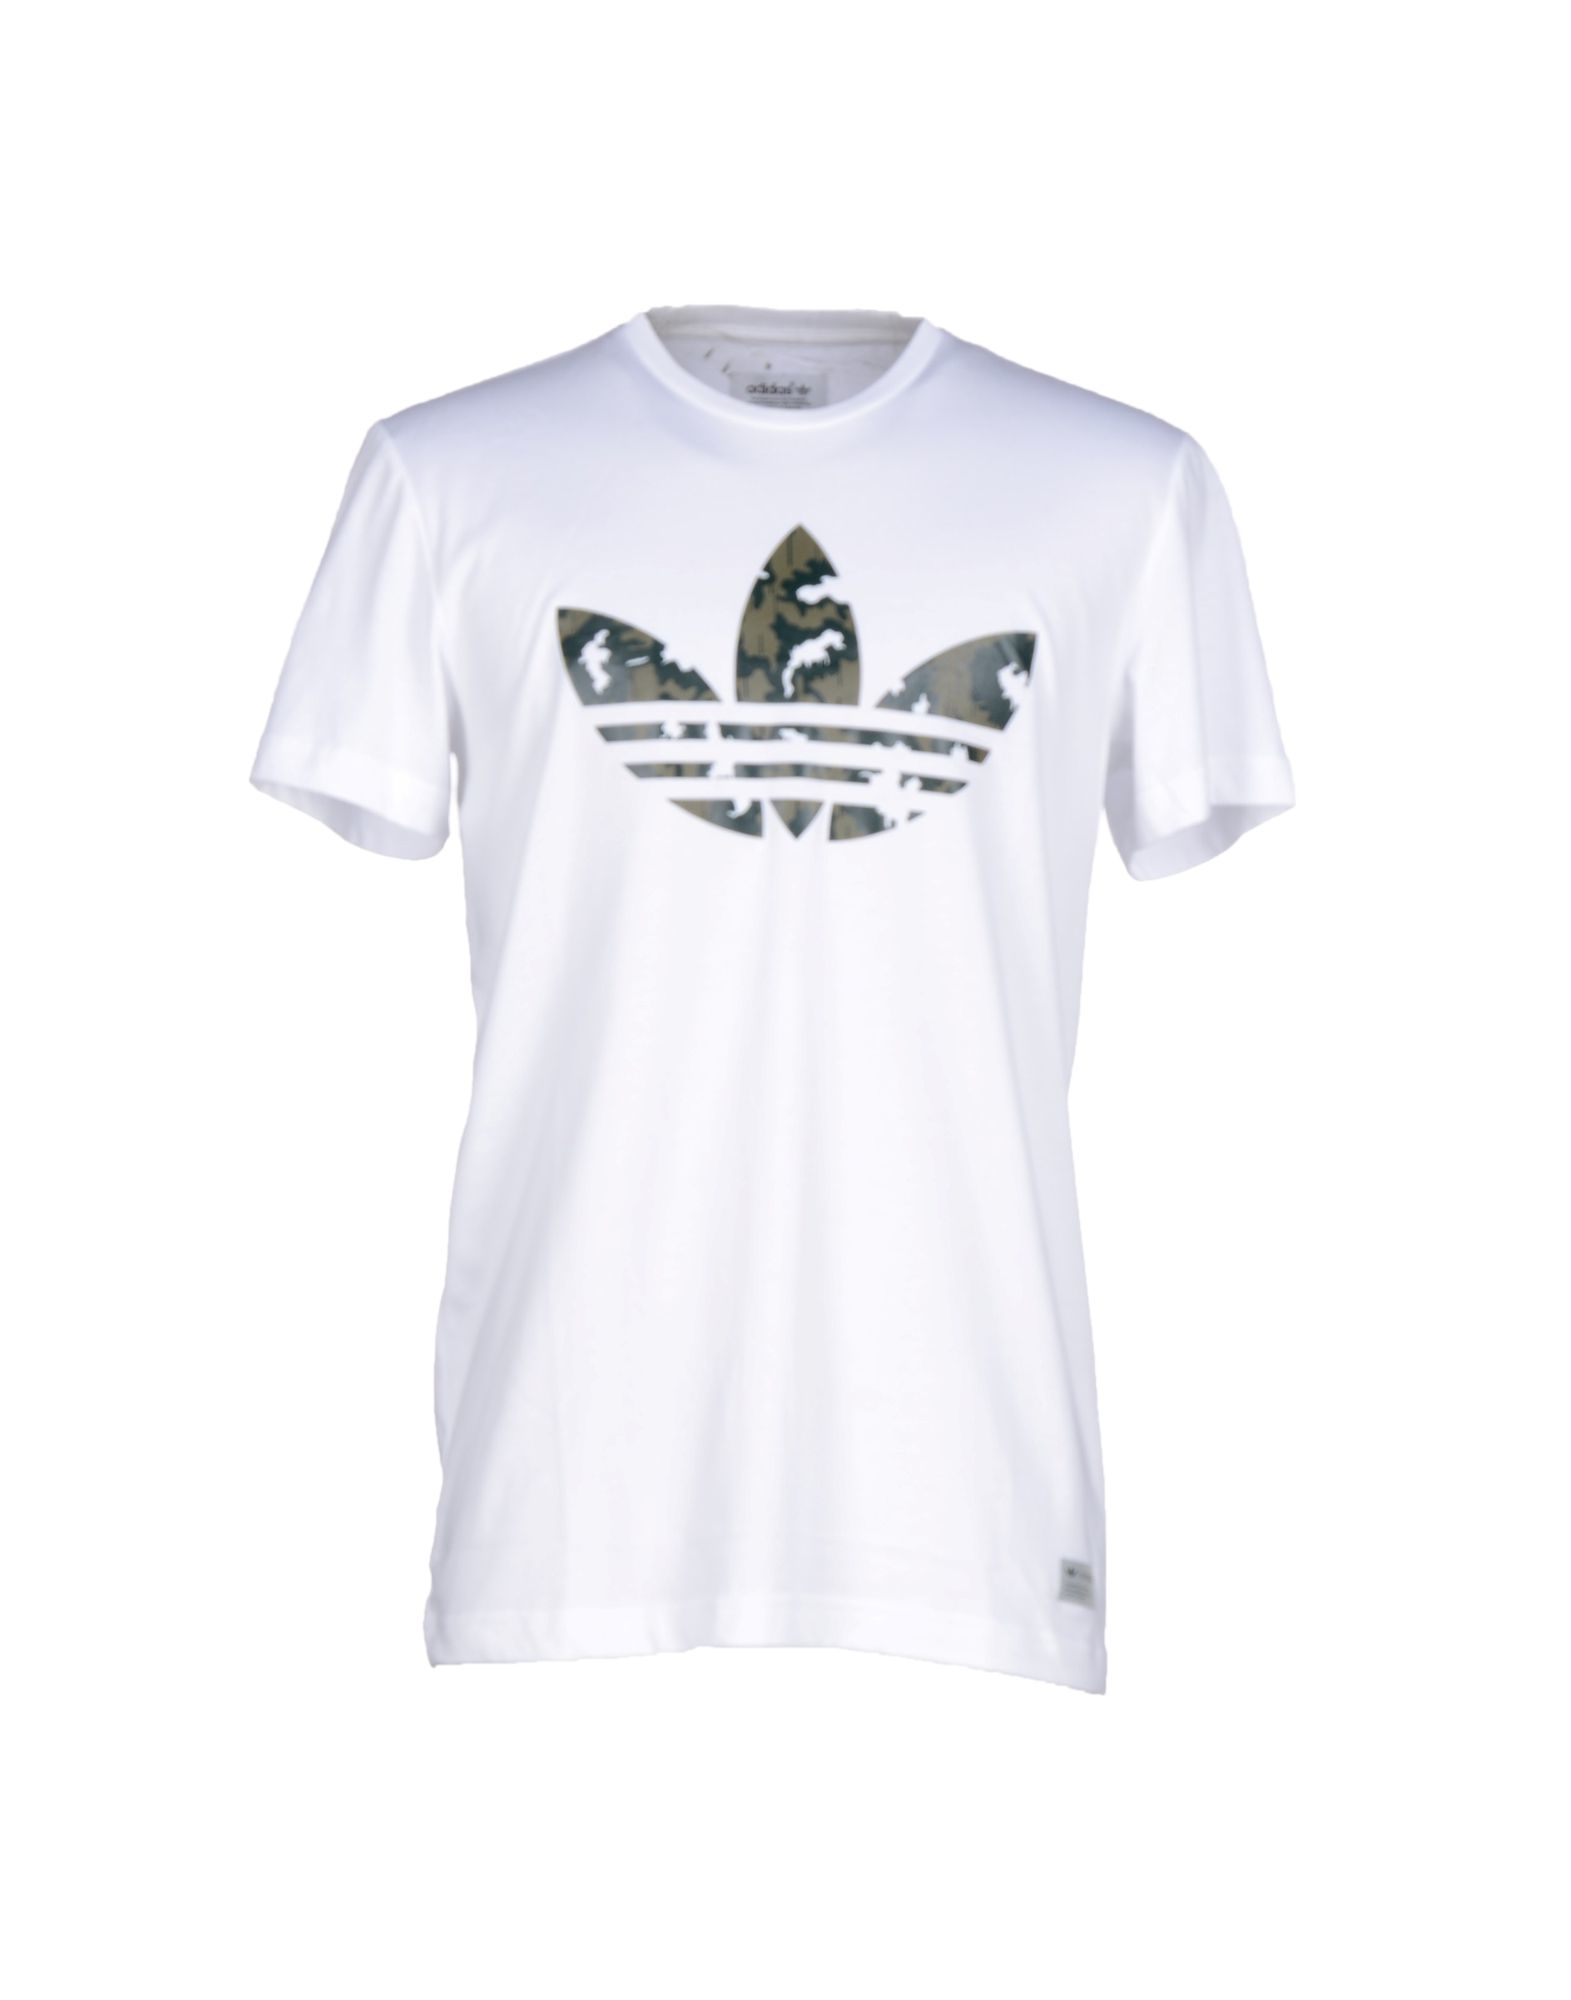 Lyst - Adidas Originals T-shirt in White for Men